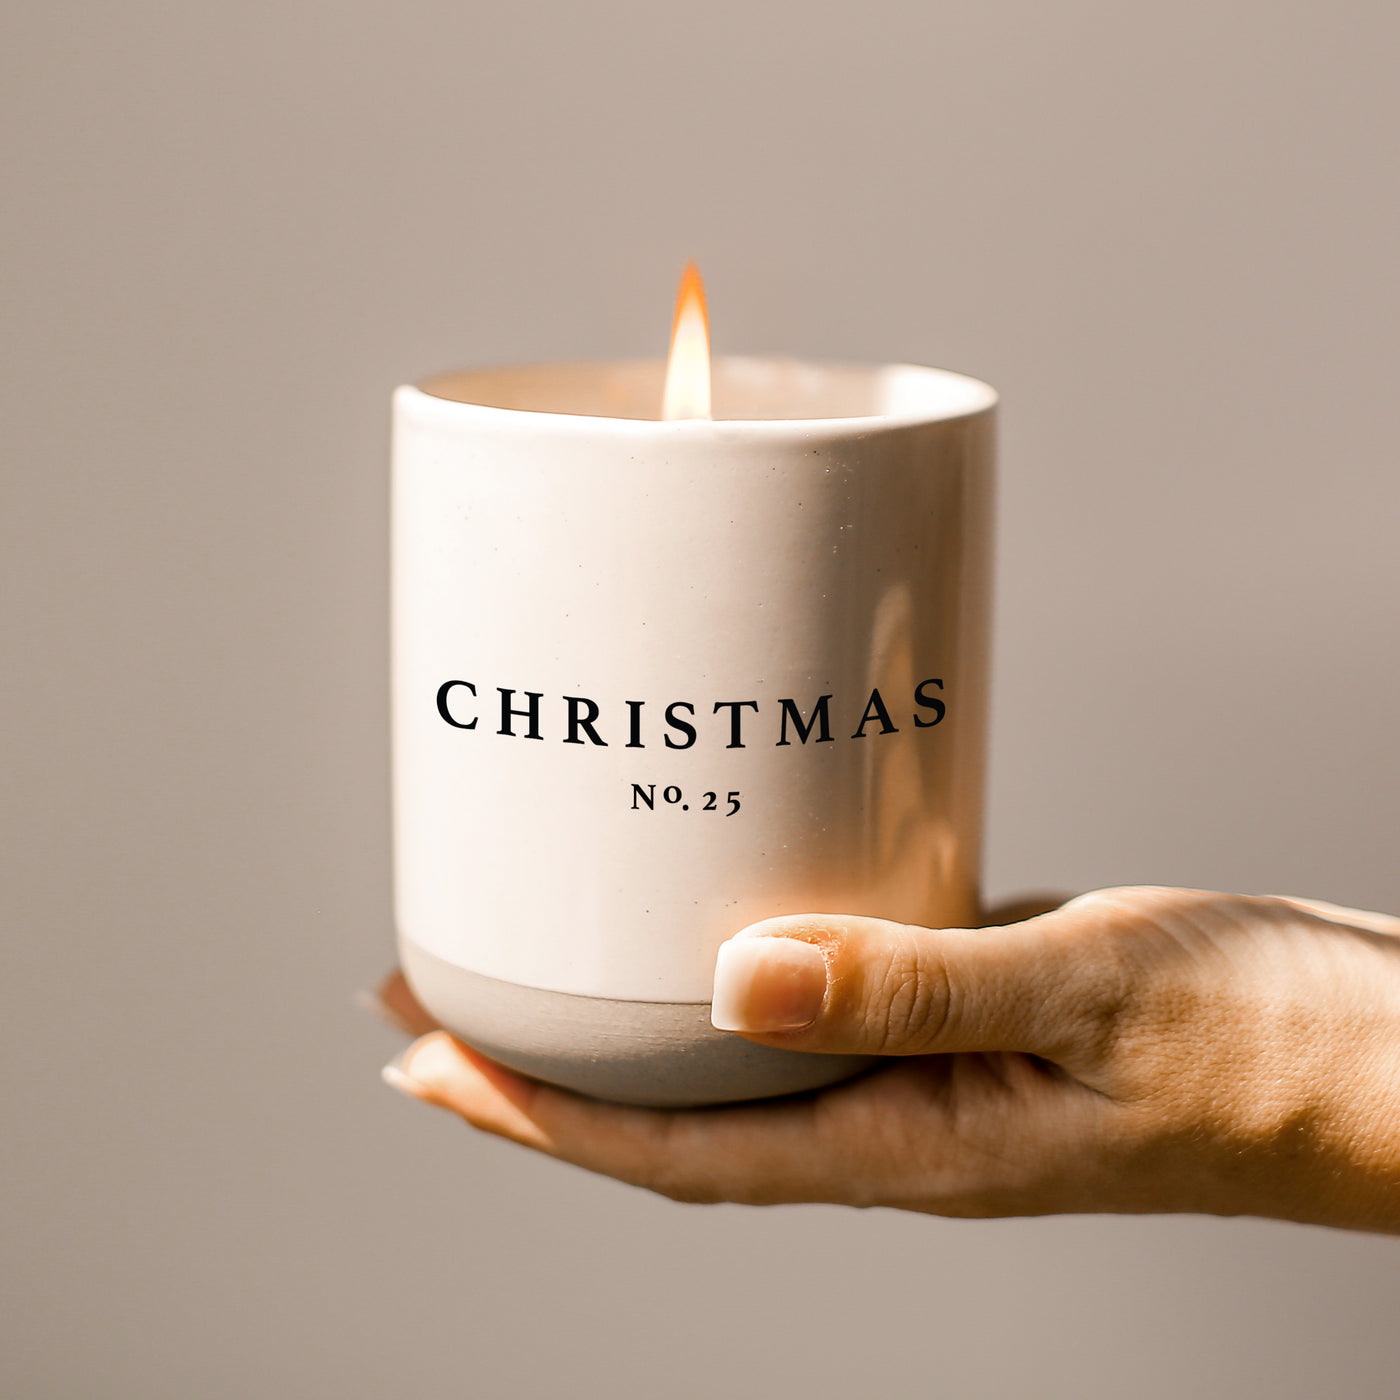 Christmas Soy Candle - Cream Stoneware Jar - 12 oz